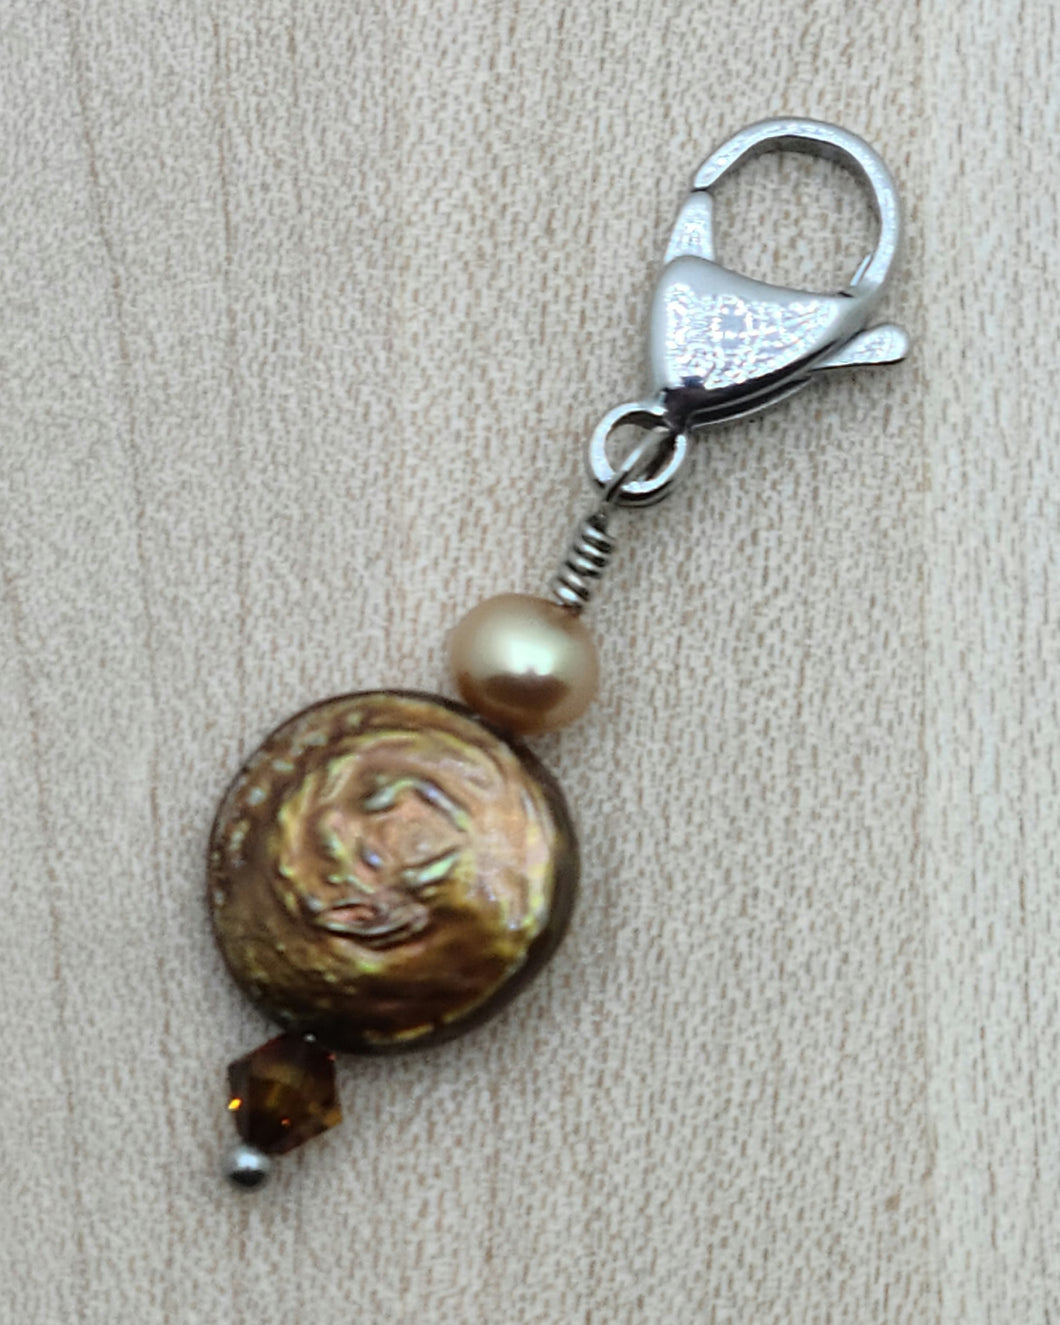 Zipper Pull - Bronze Coin Pearl